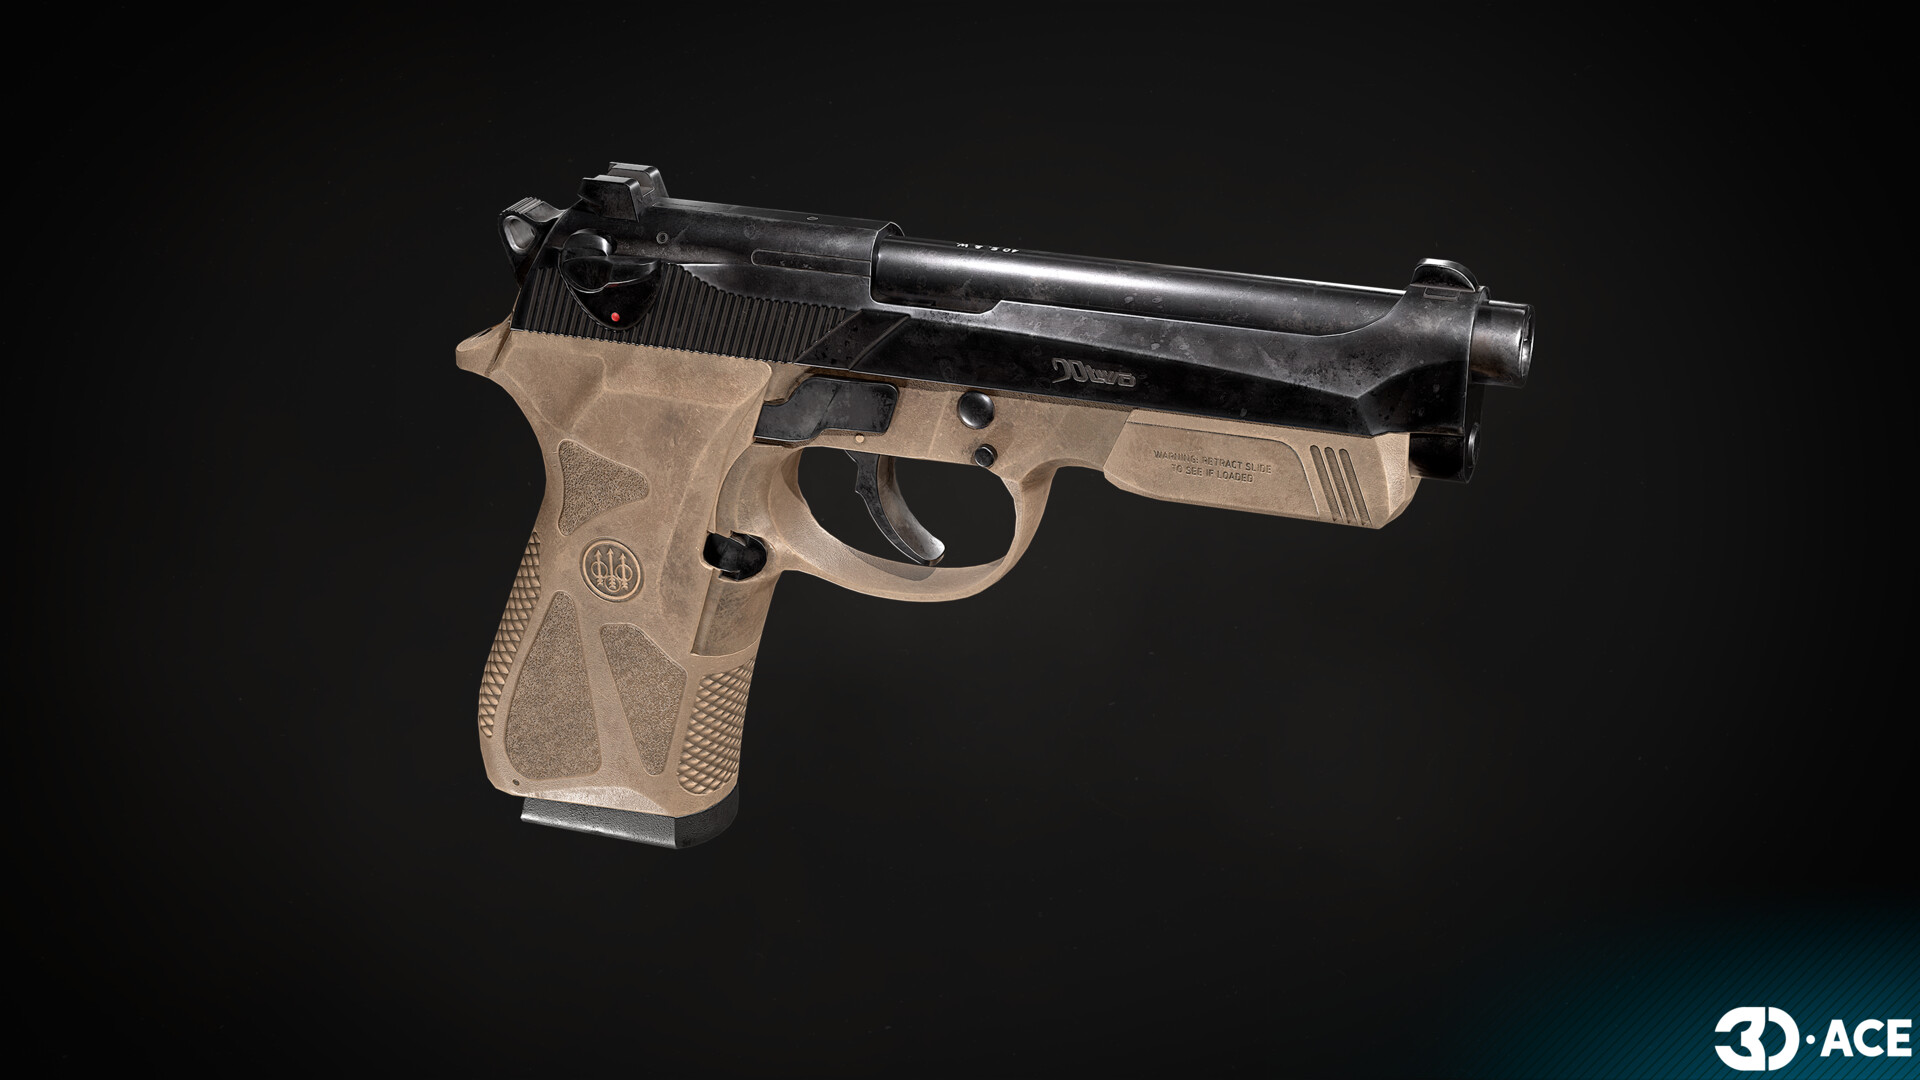 3D beretta pistol for UE gaming project